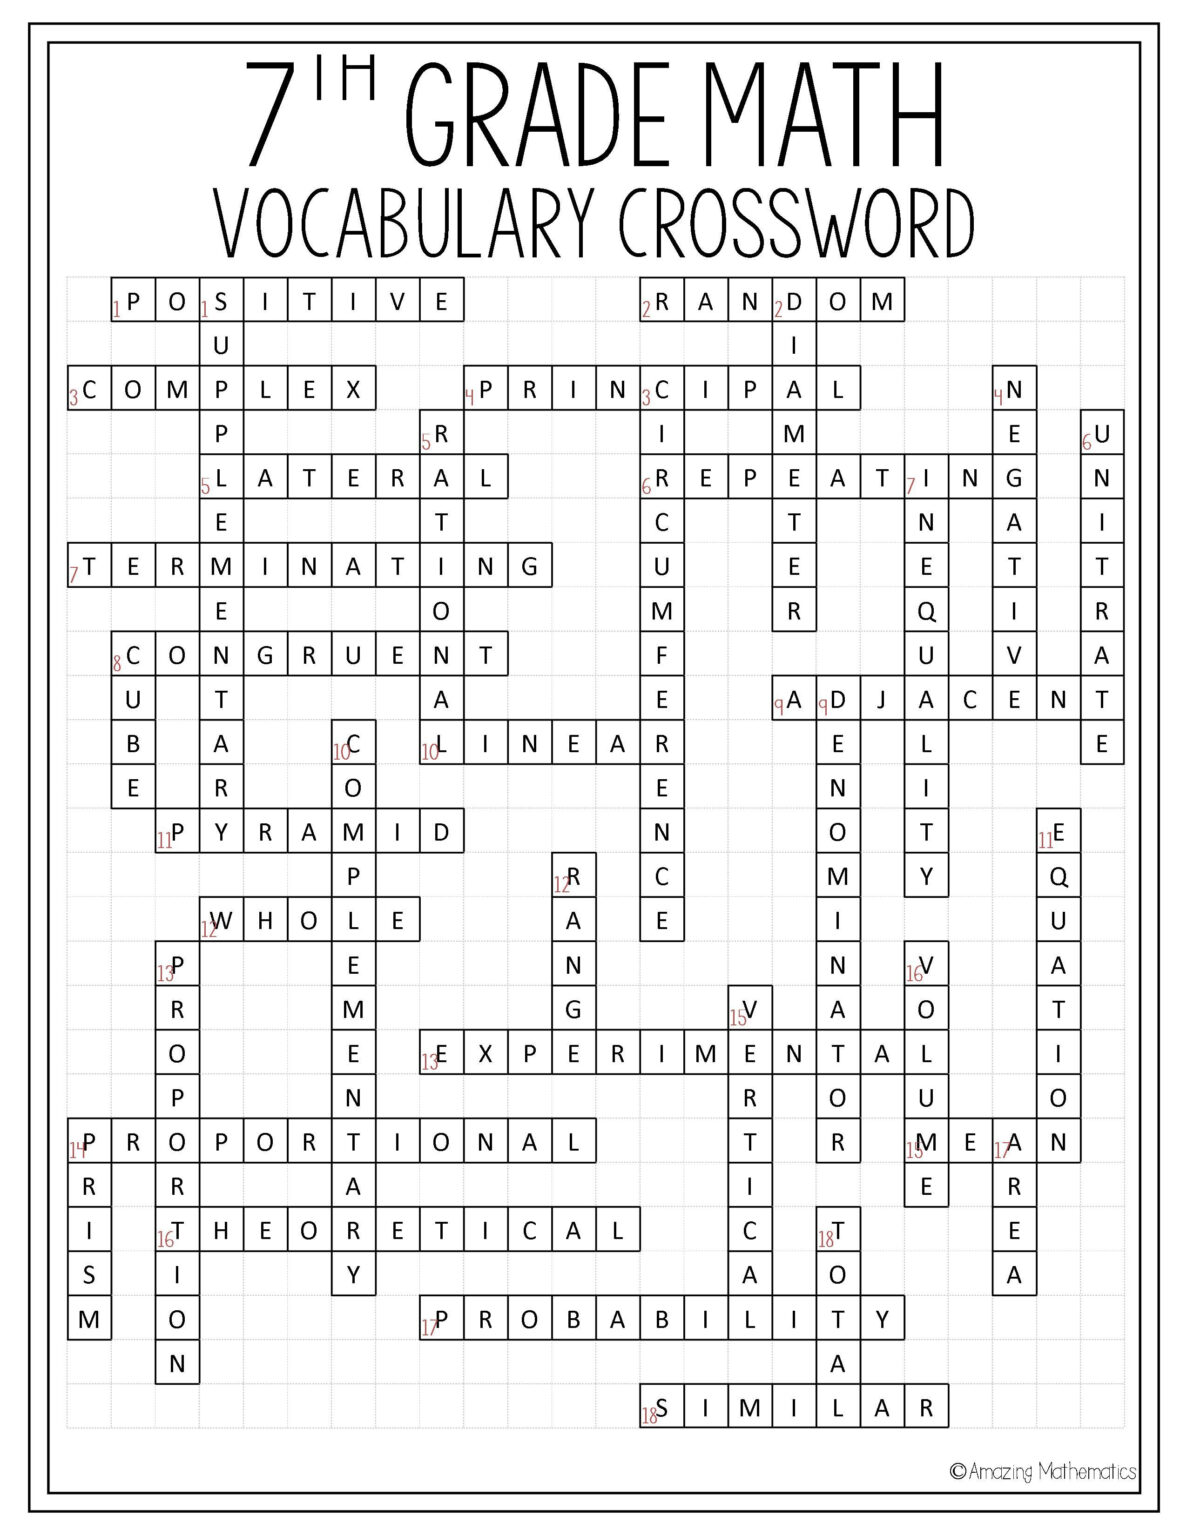 periodic-table-crossword-puzzle-teaching-resources-crossword-free-sally-crossword-puzzles